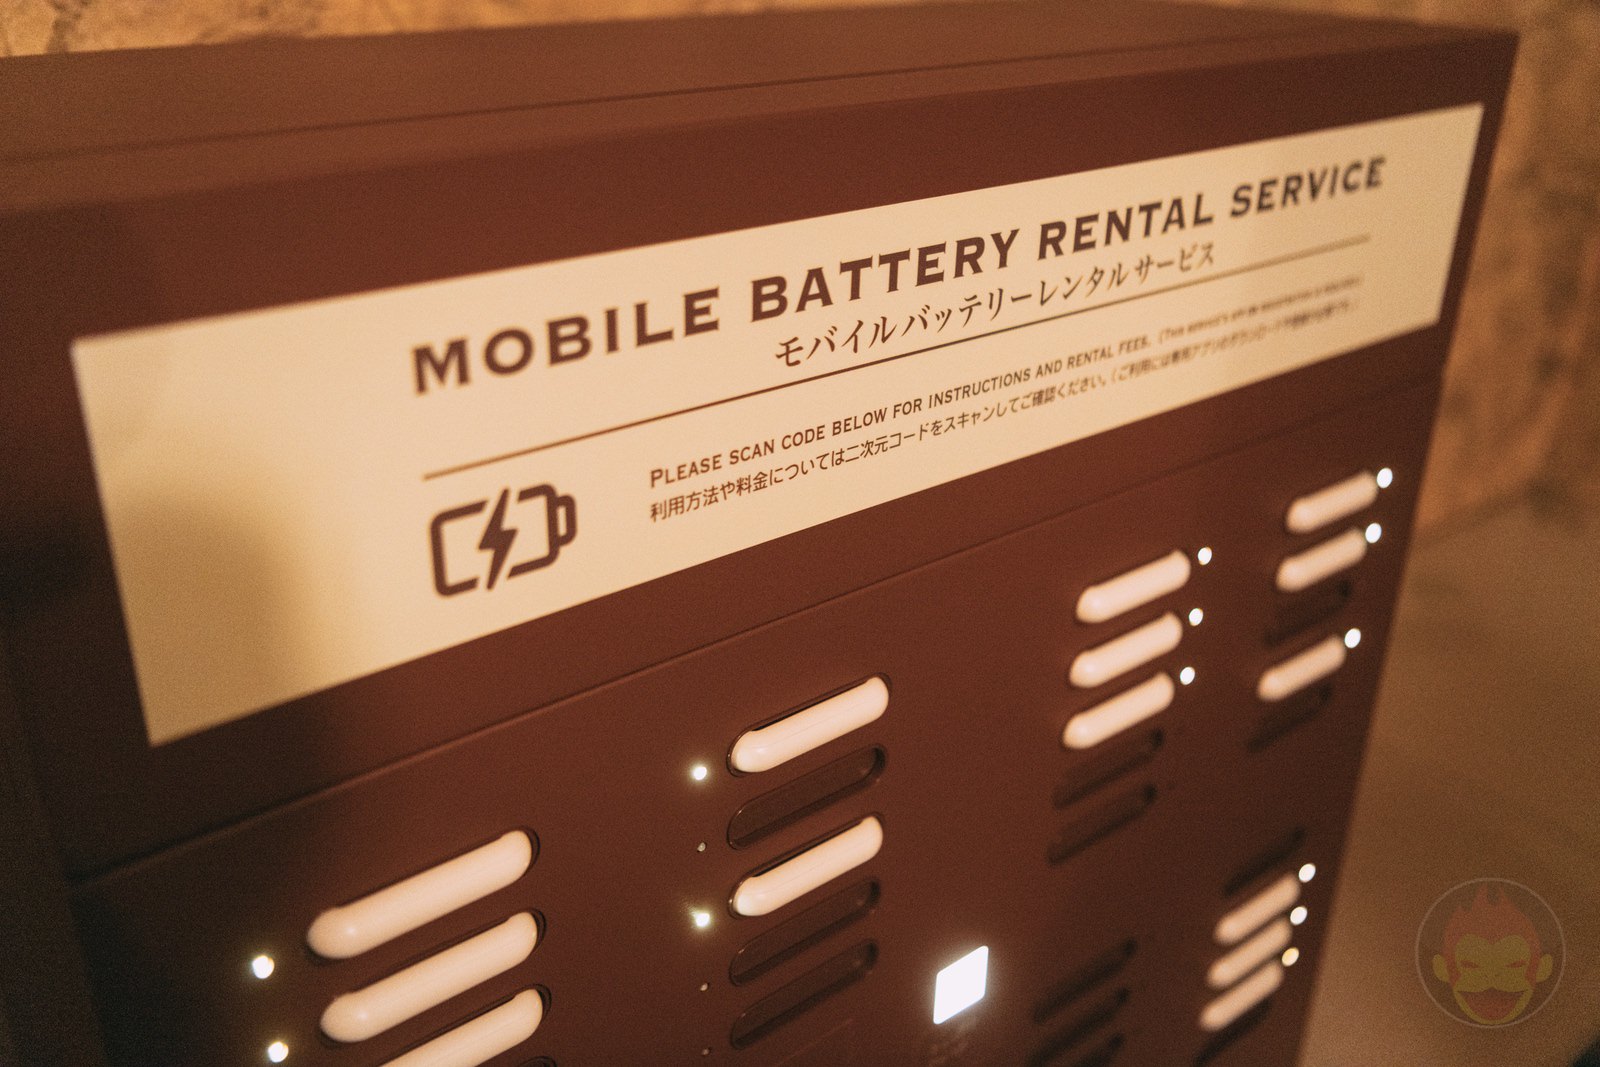 Disney Mobile Battery Rental Service 03